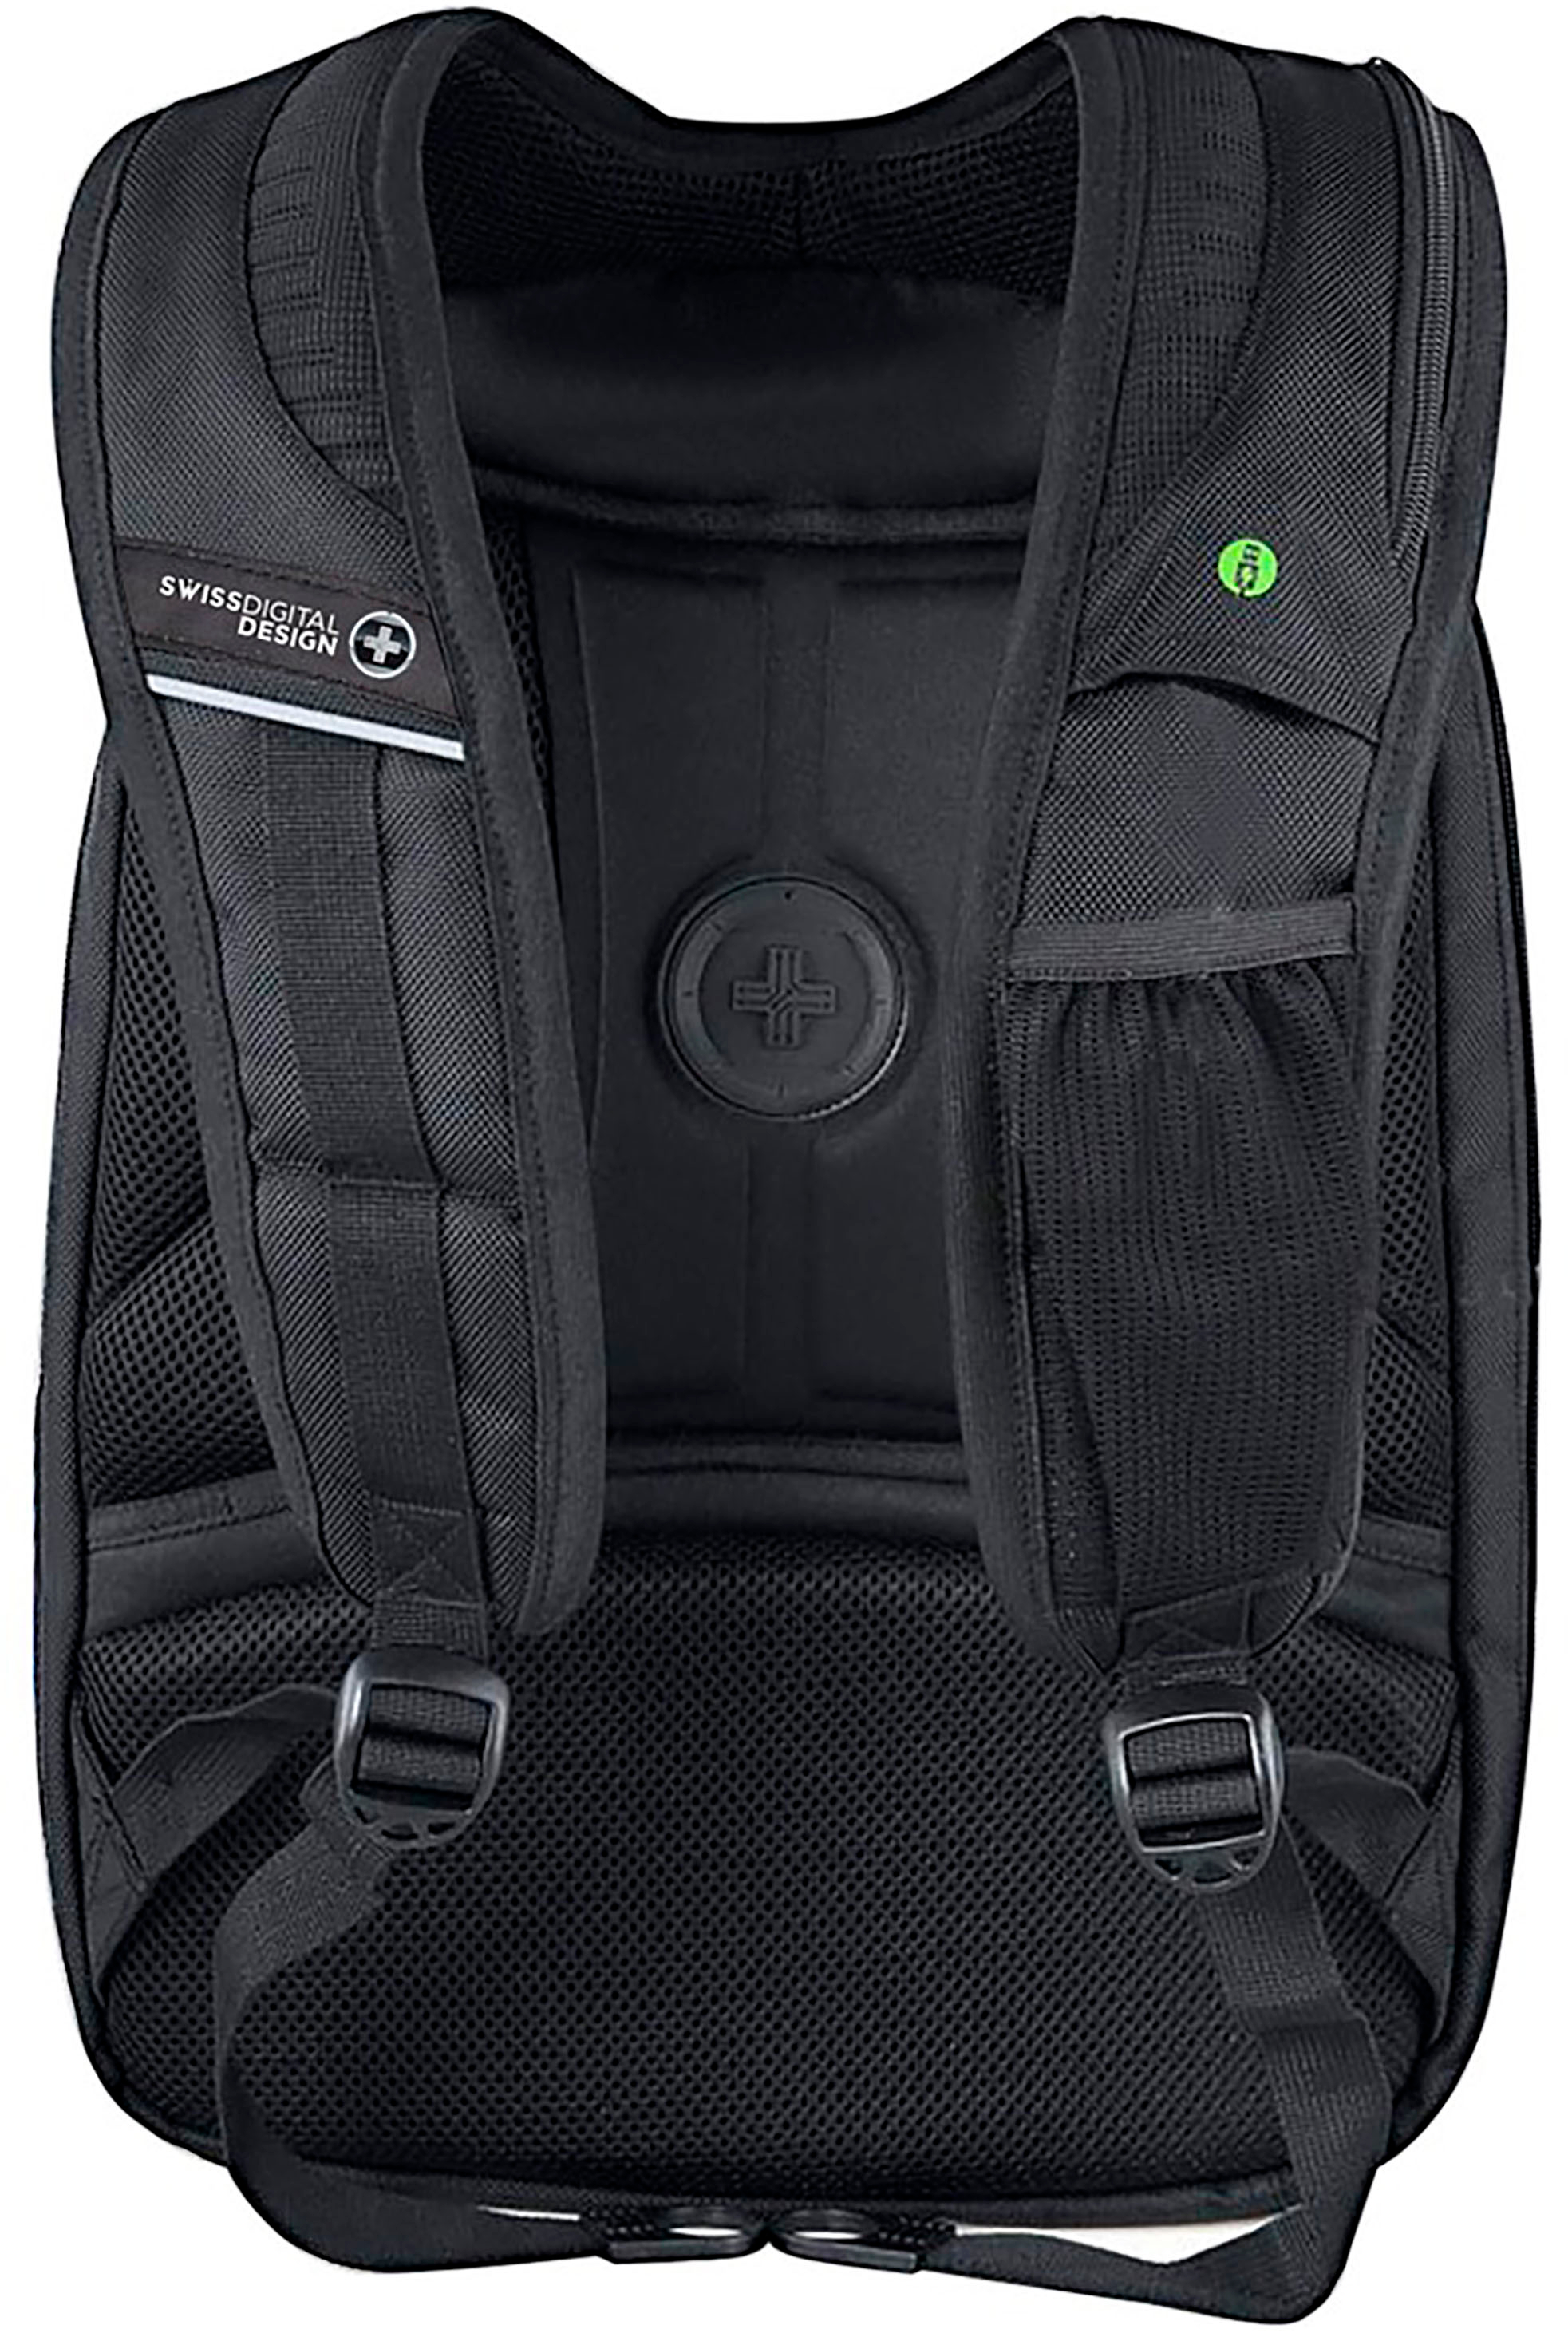 Back View: Thule - Chronical 28L Backpack for 15.6" Laptop with 10.1" Tablet Sleeve, SafeZone Pocket, Water Bottle Holder, Padded Backpanel - Black